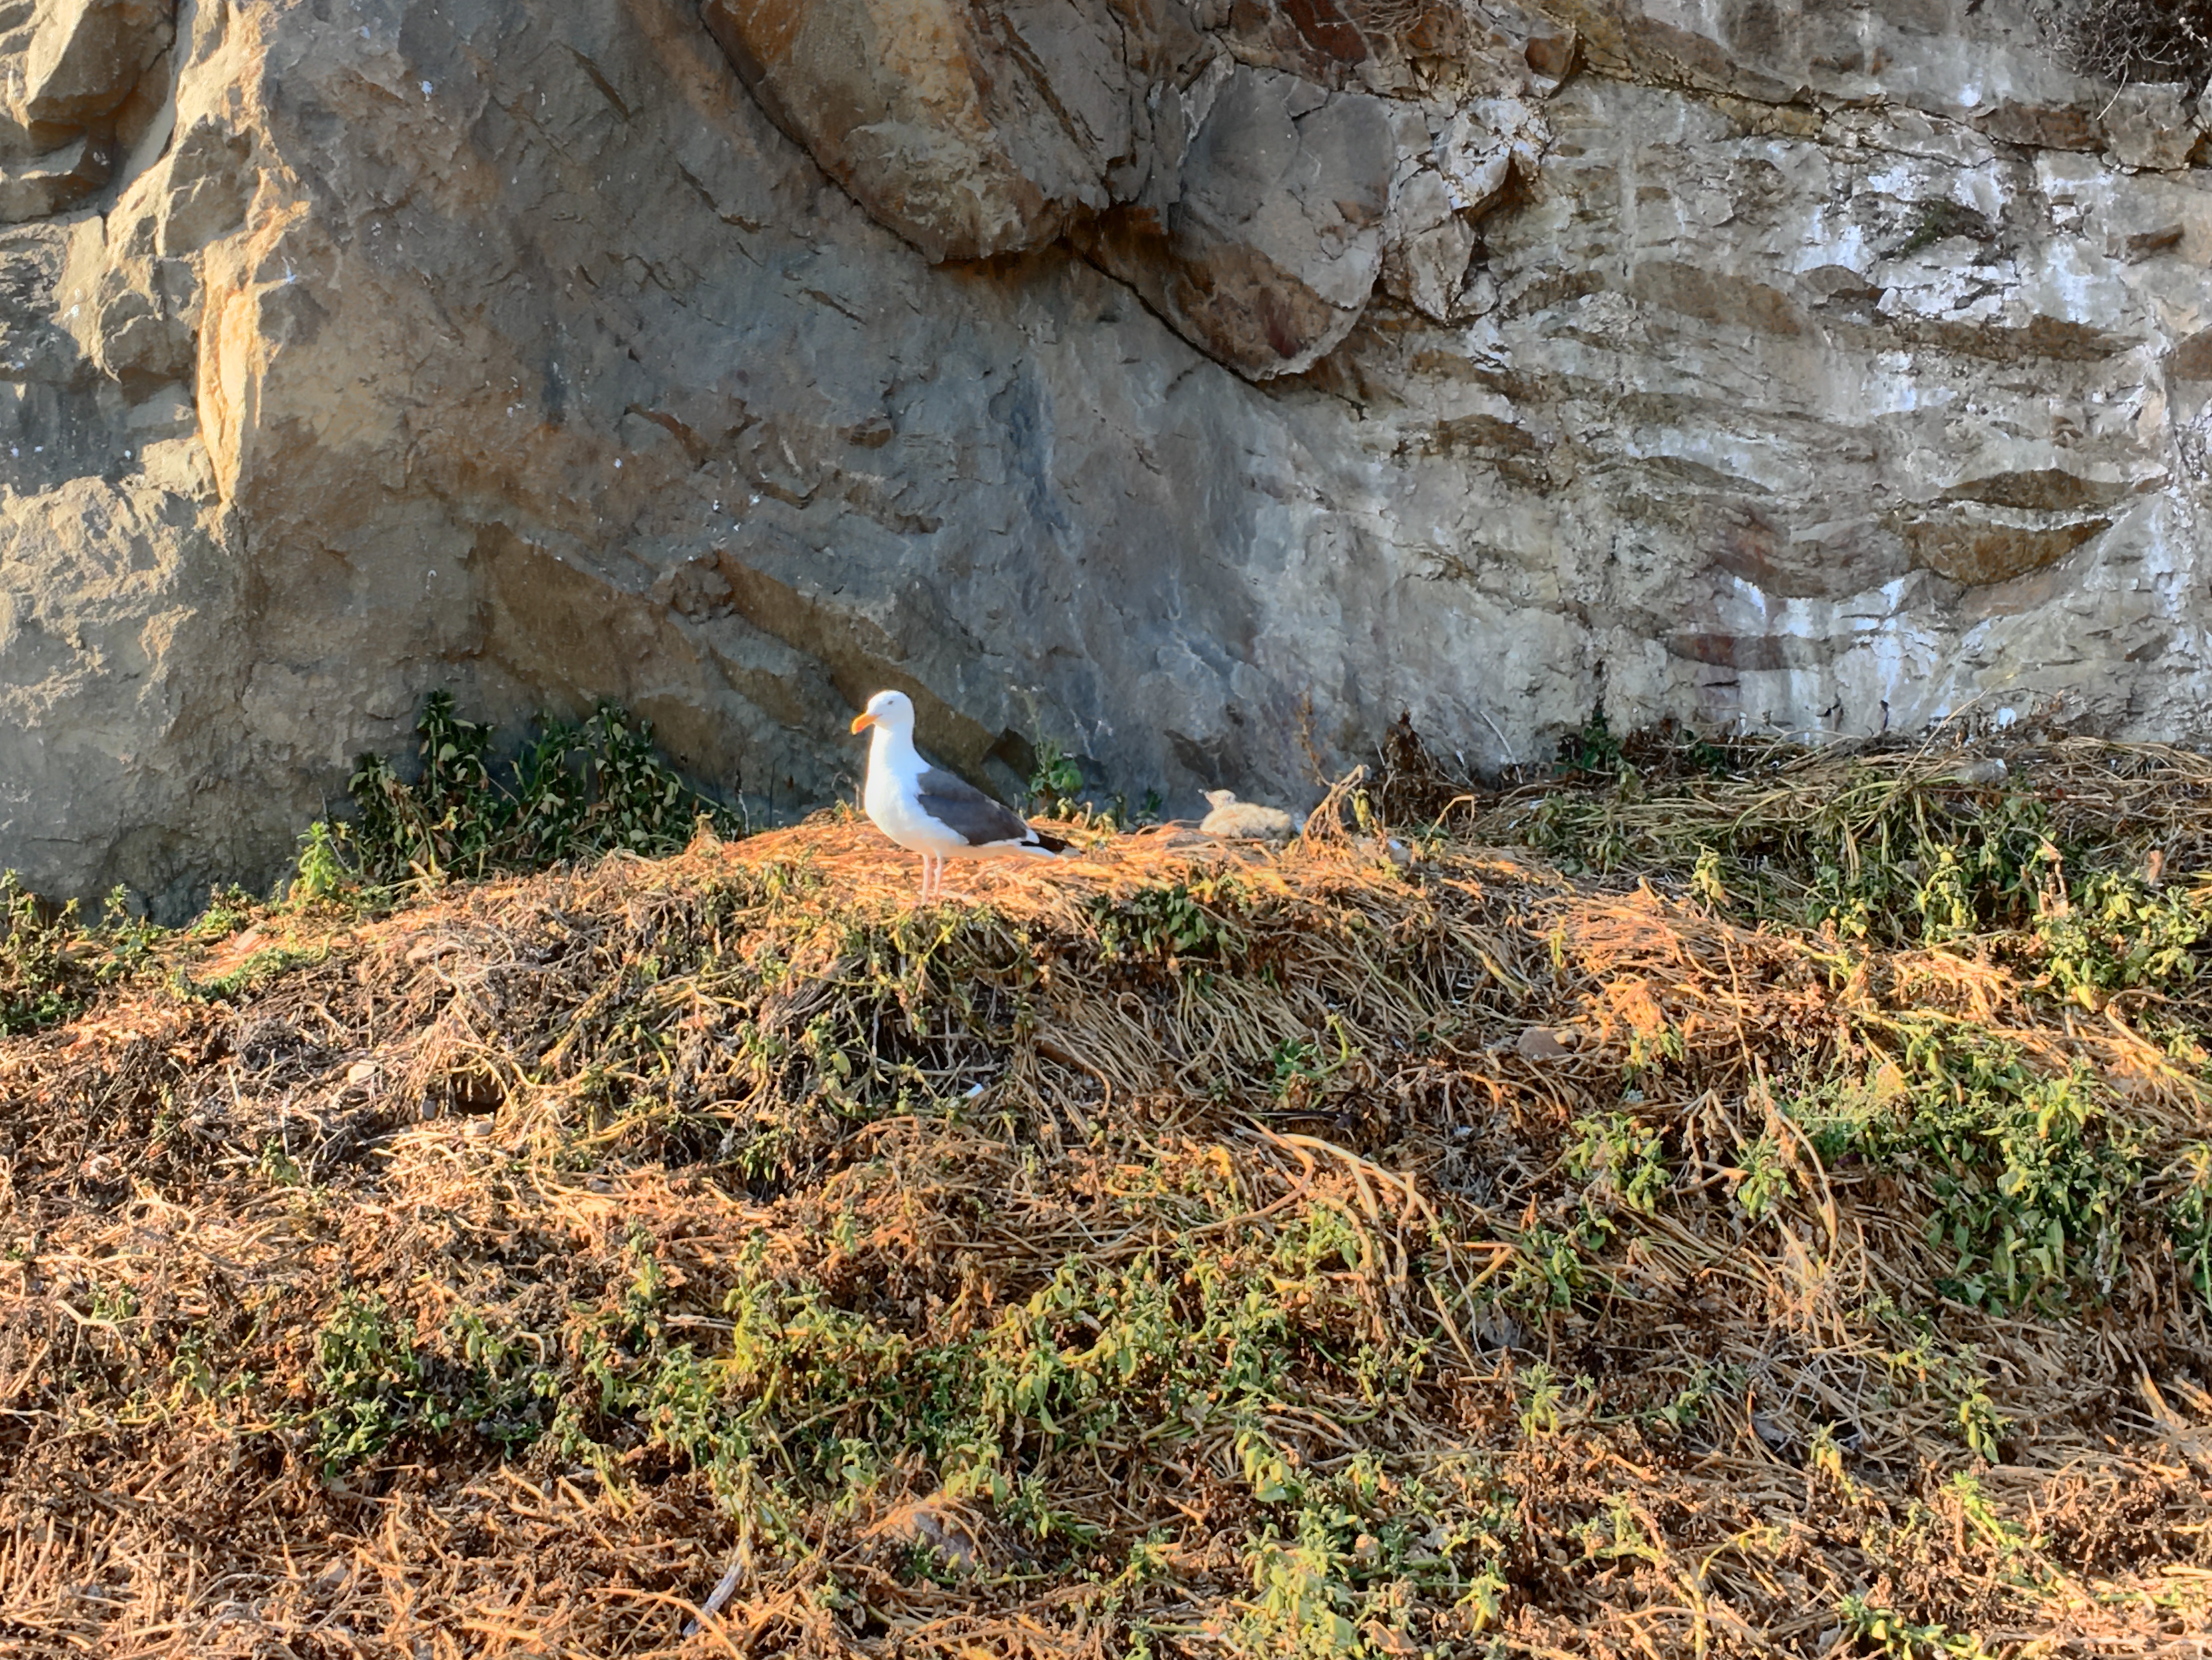 Morro Bay sea gull and baby